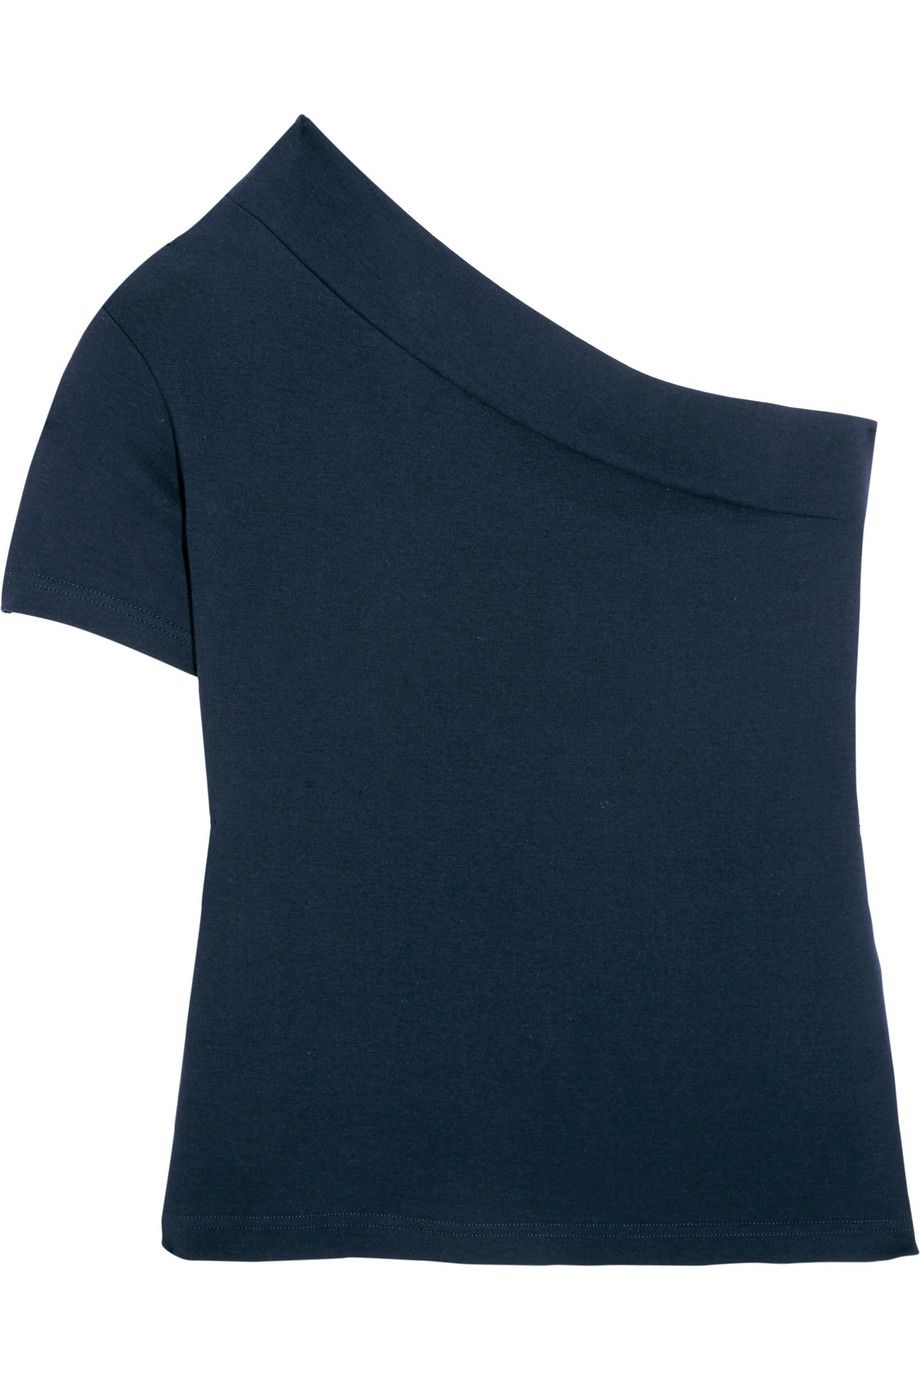 Product, Sleeve, White, Neck, Black, Grey, Active shirt, Active tank, 